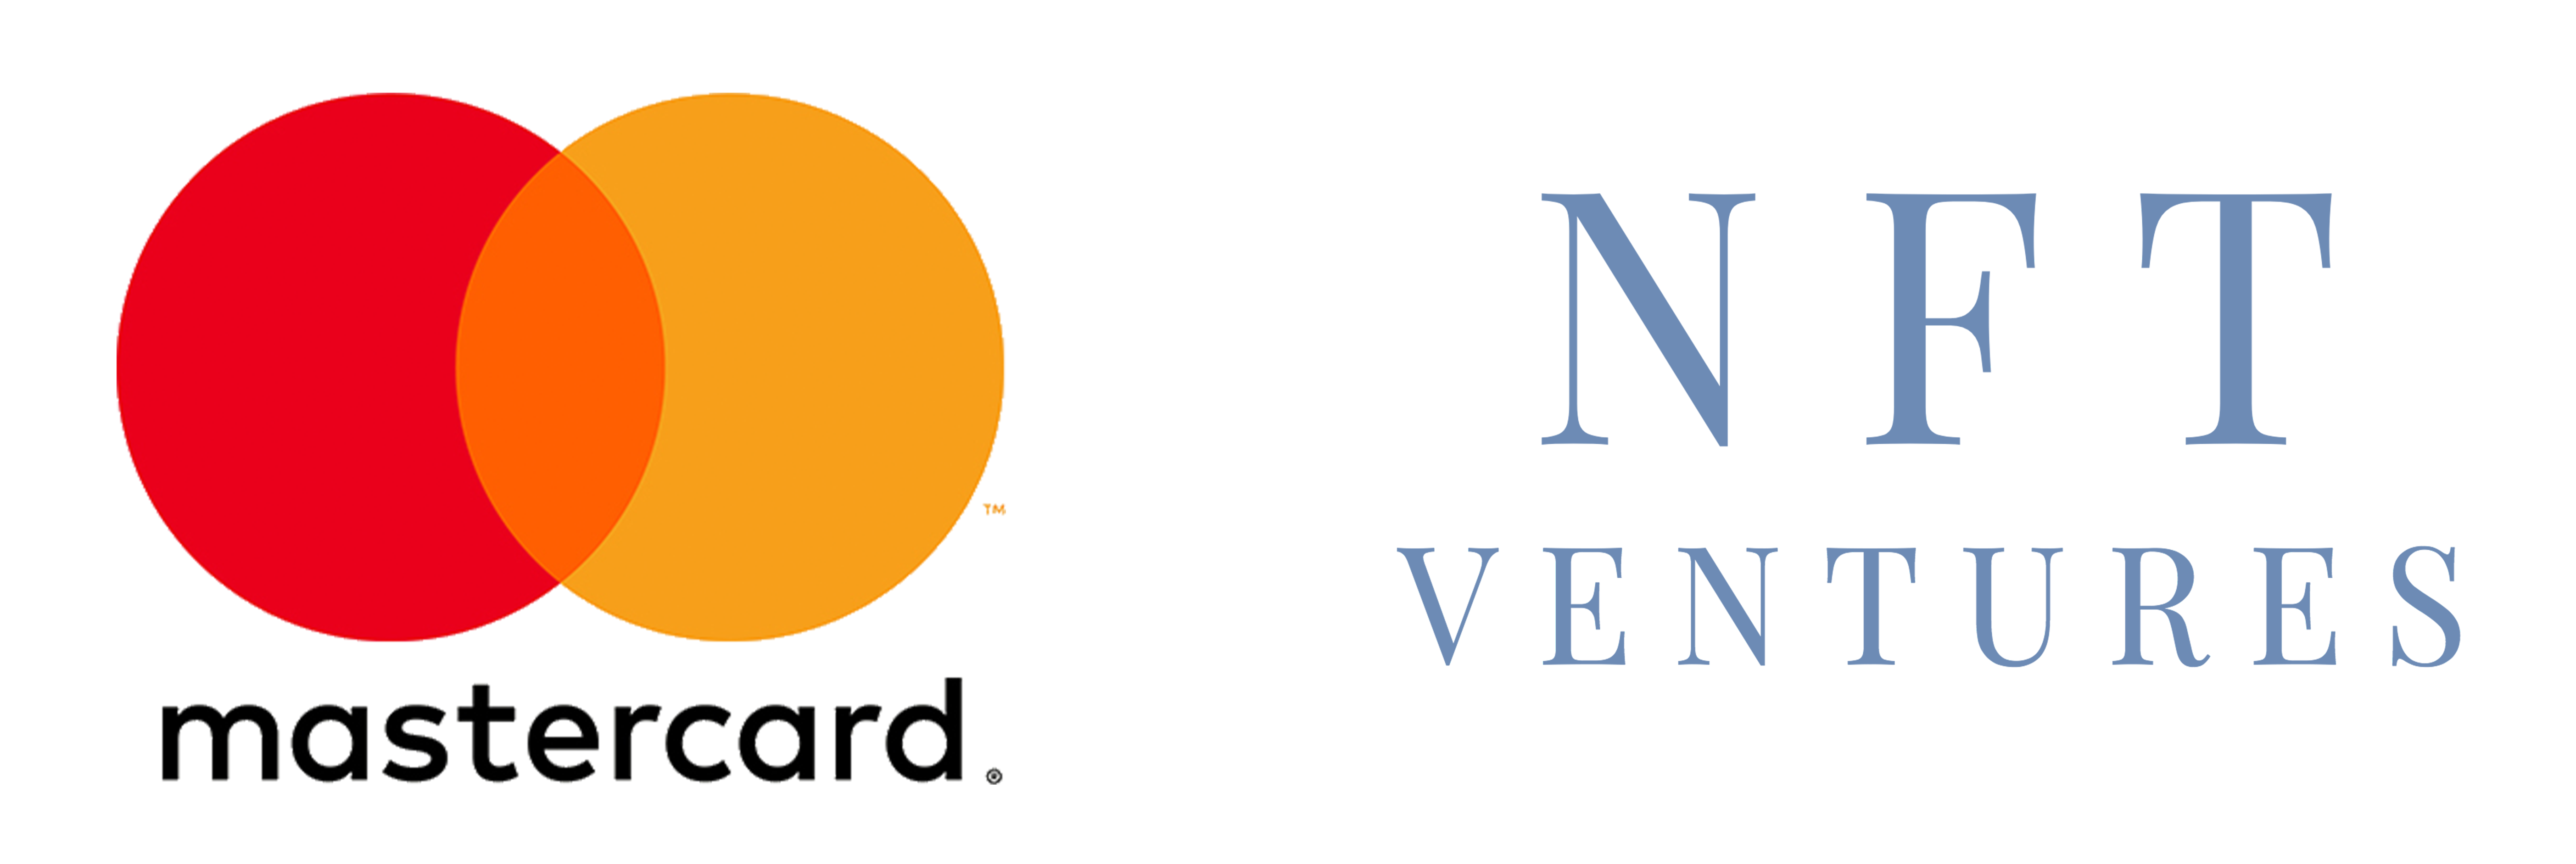 MC and NFT Ventures logo